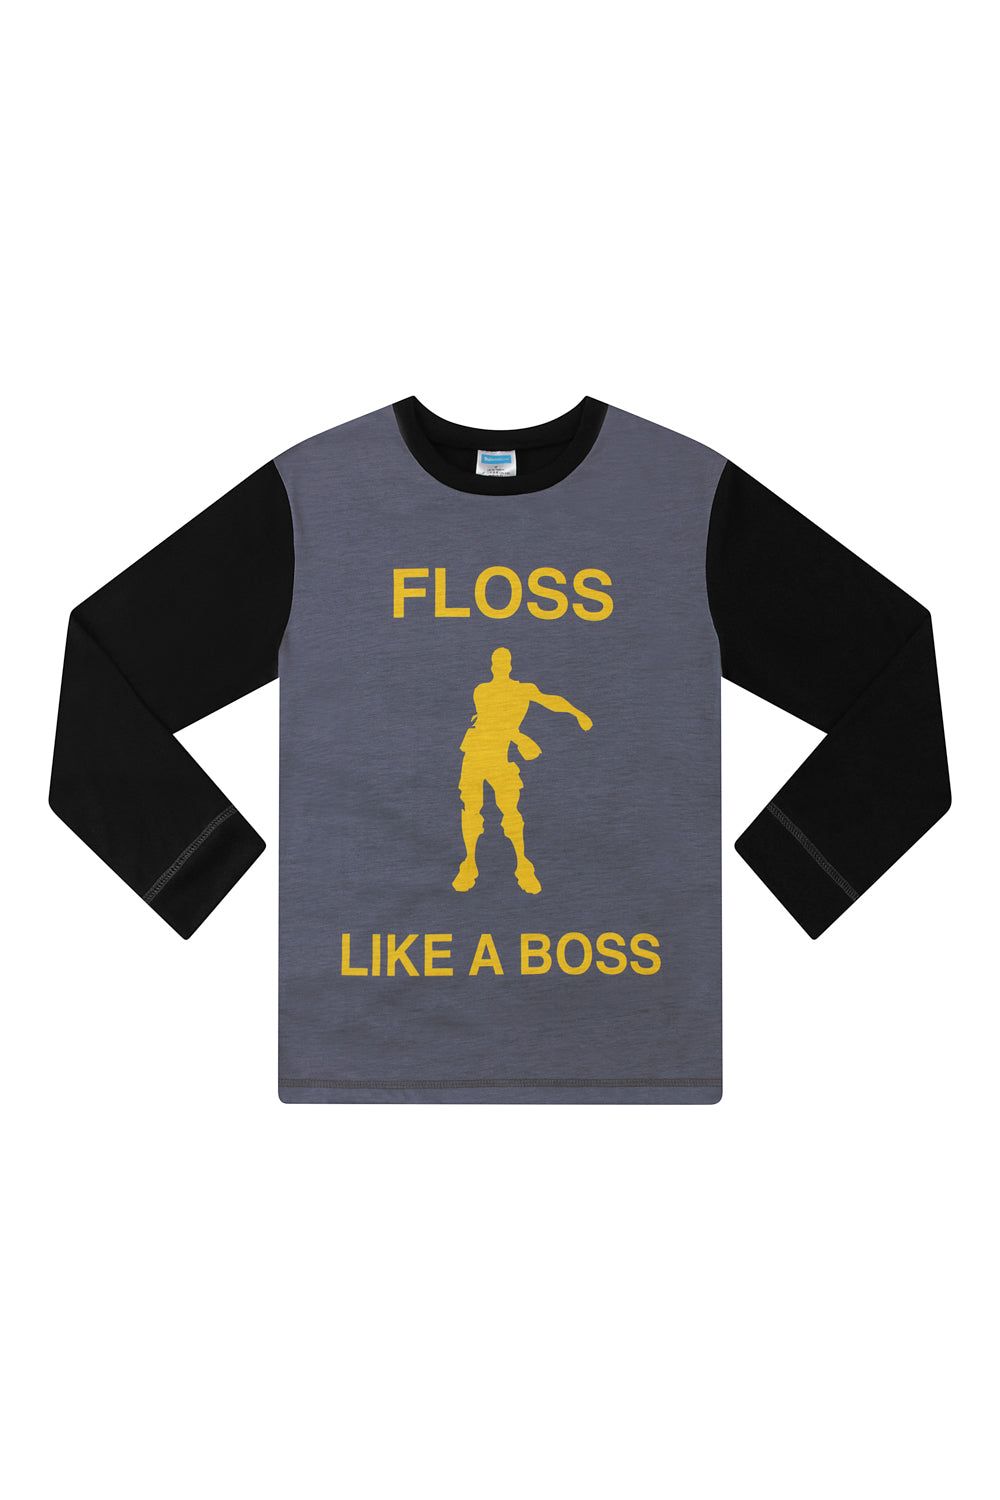 Floss Like a Boss  Emote Dance Gaming Long Pyjamas Gold - Pyjamas.com